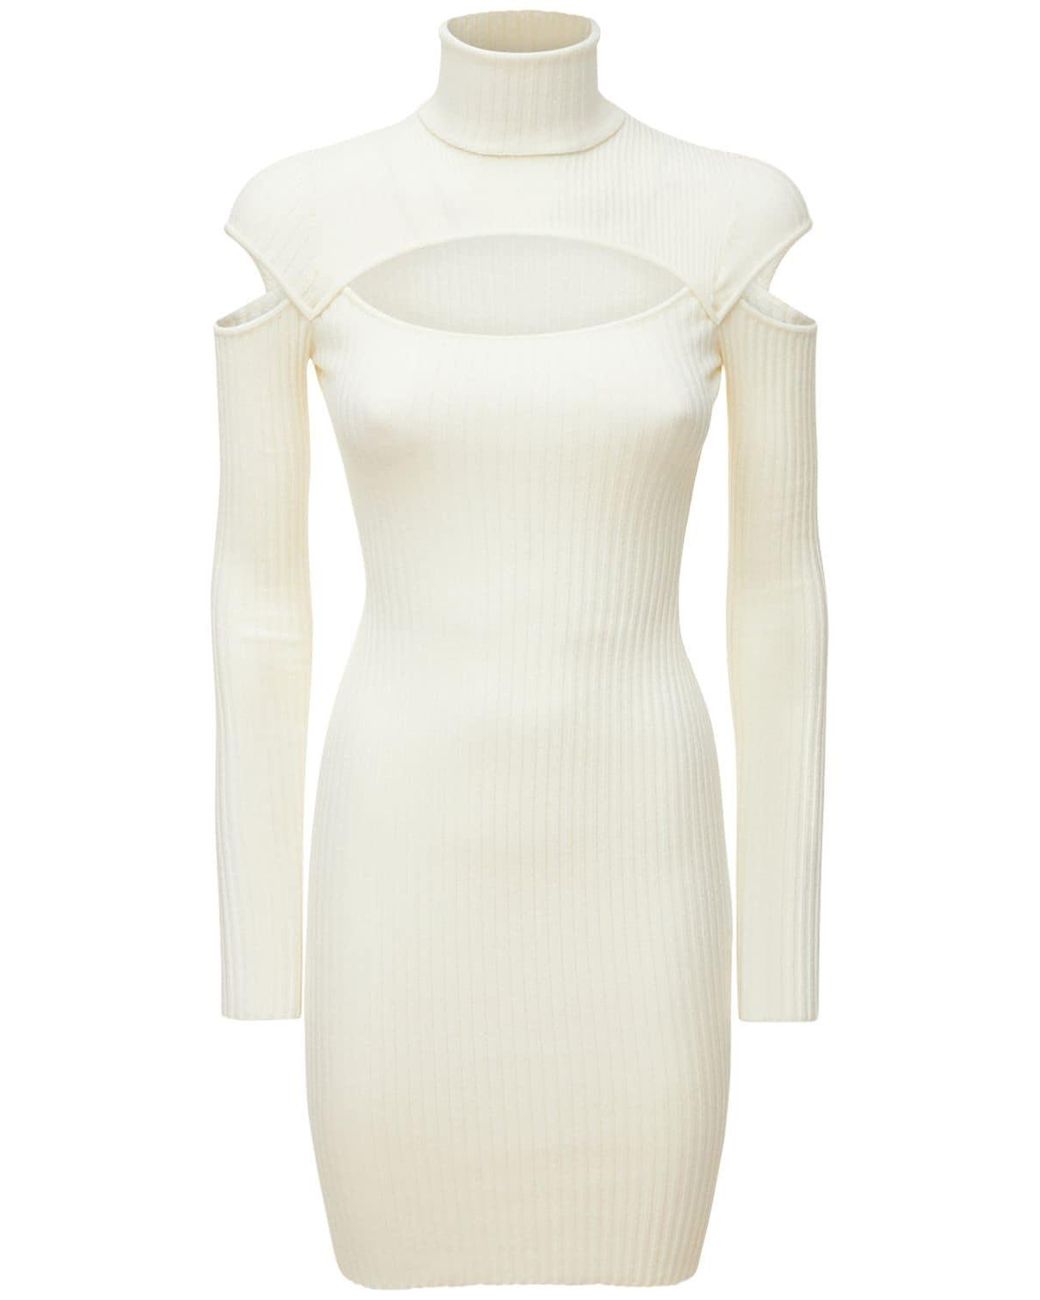 ANDREADAMO Lvr Exclusive Rib Knit Mini Dress in White | Lyst